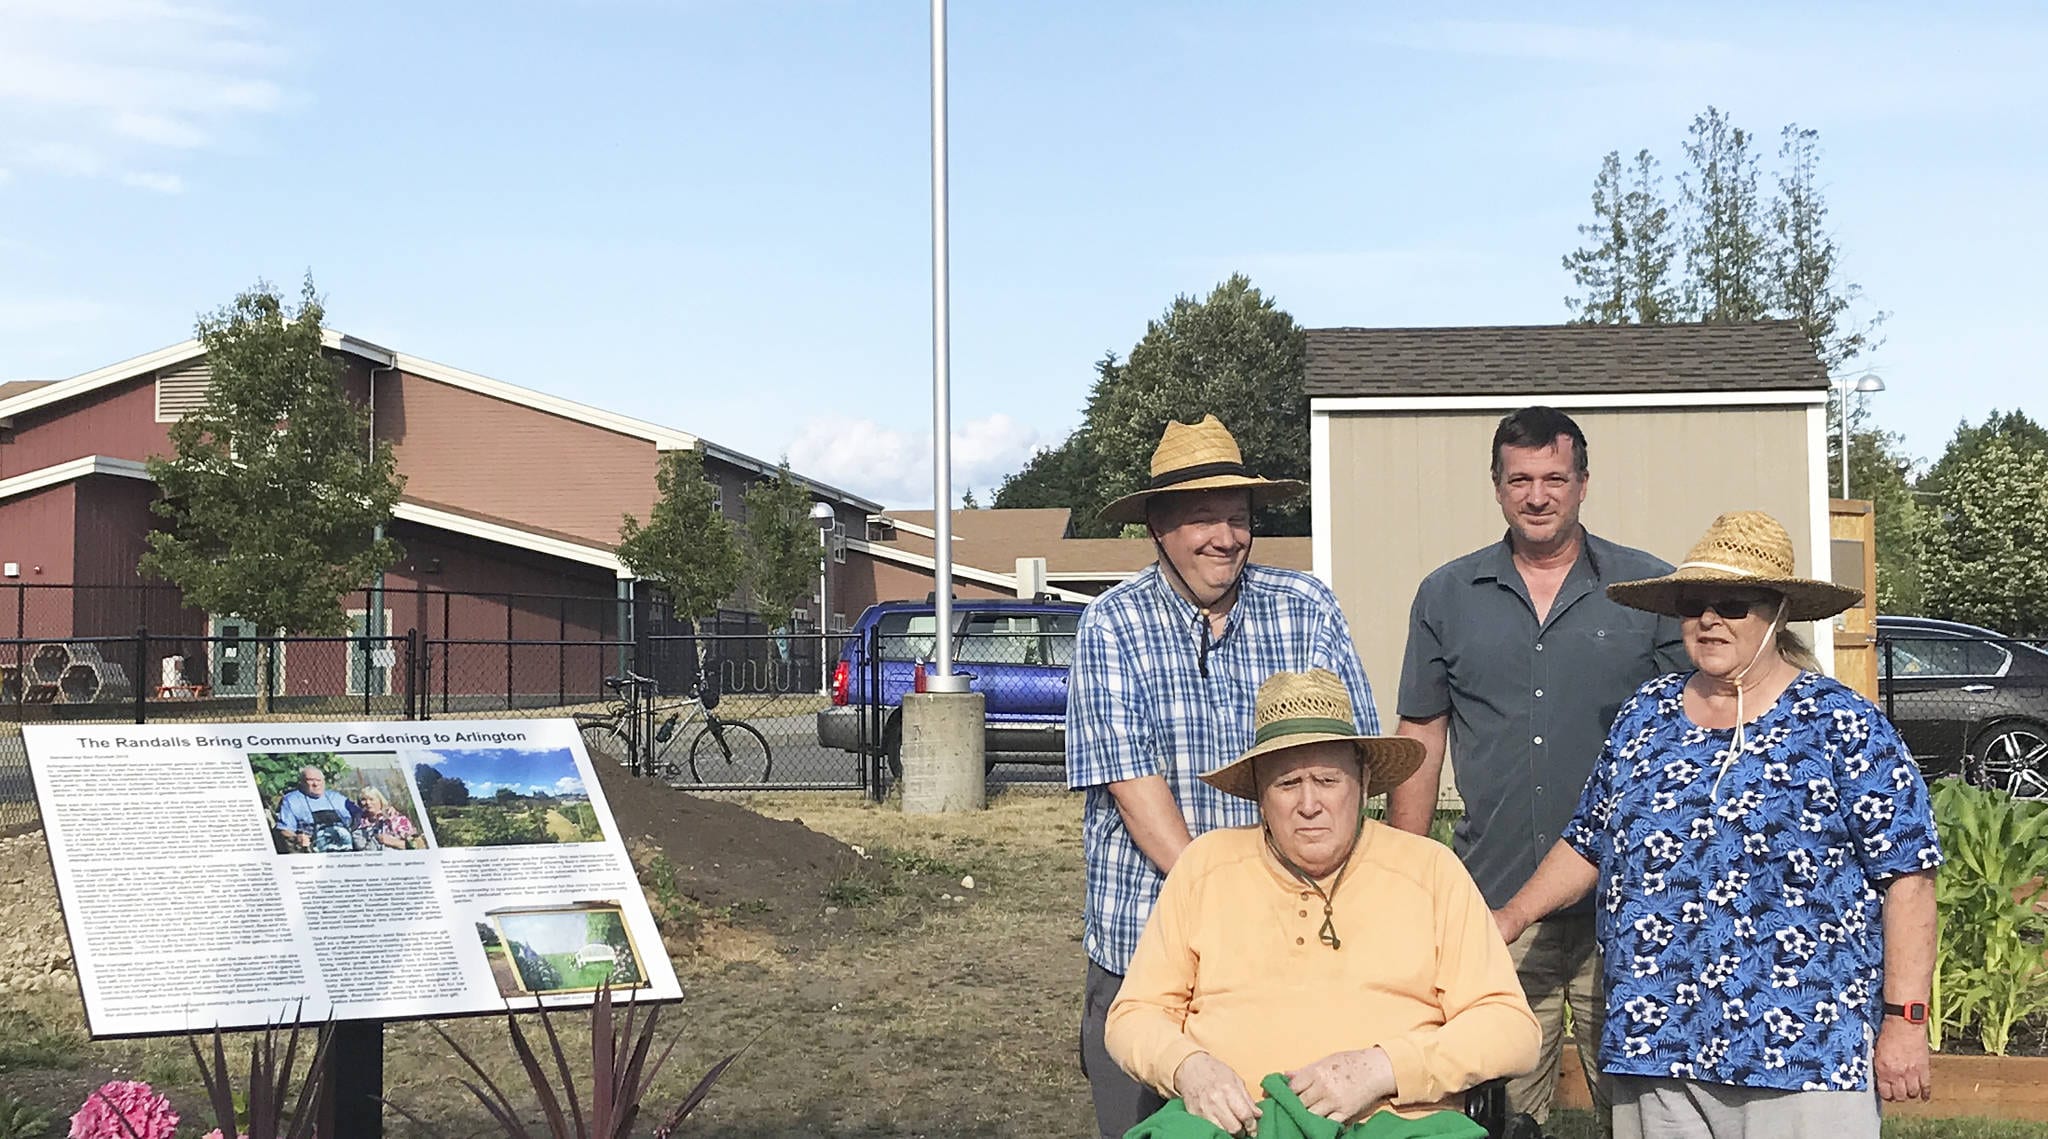 Randalls honored for bringing community gardening to Arlington